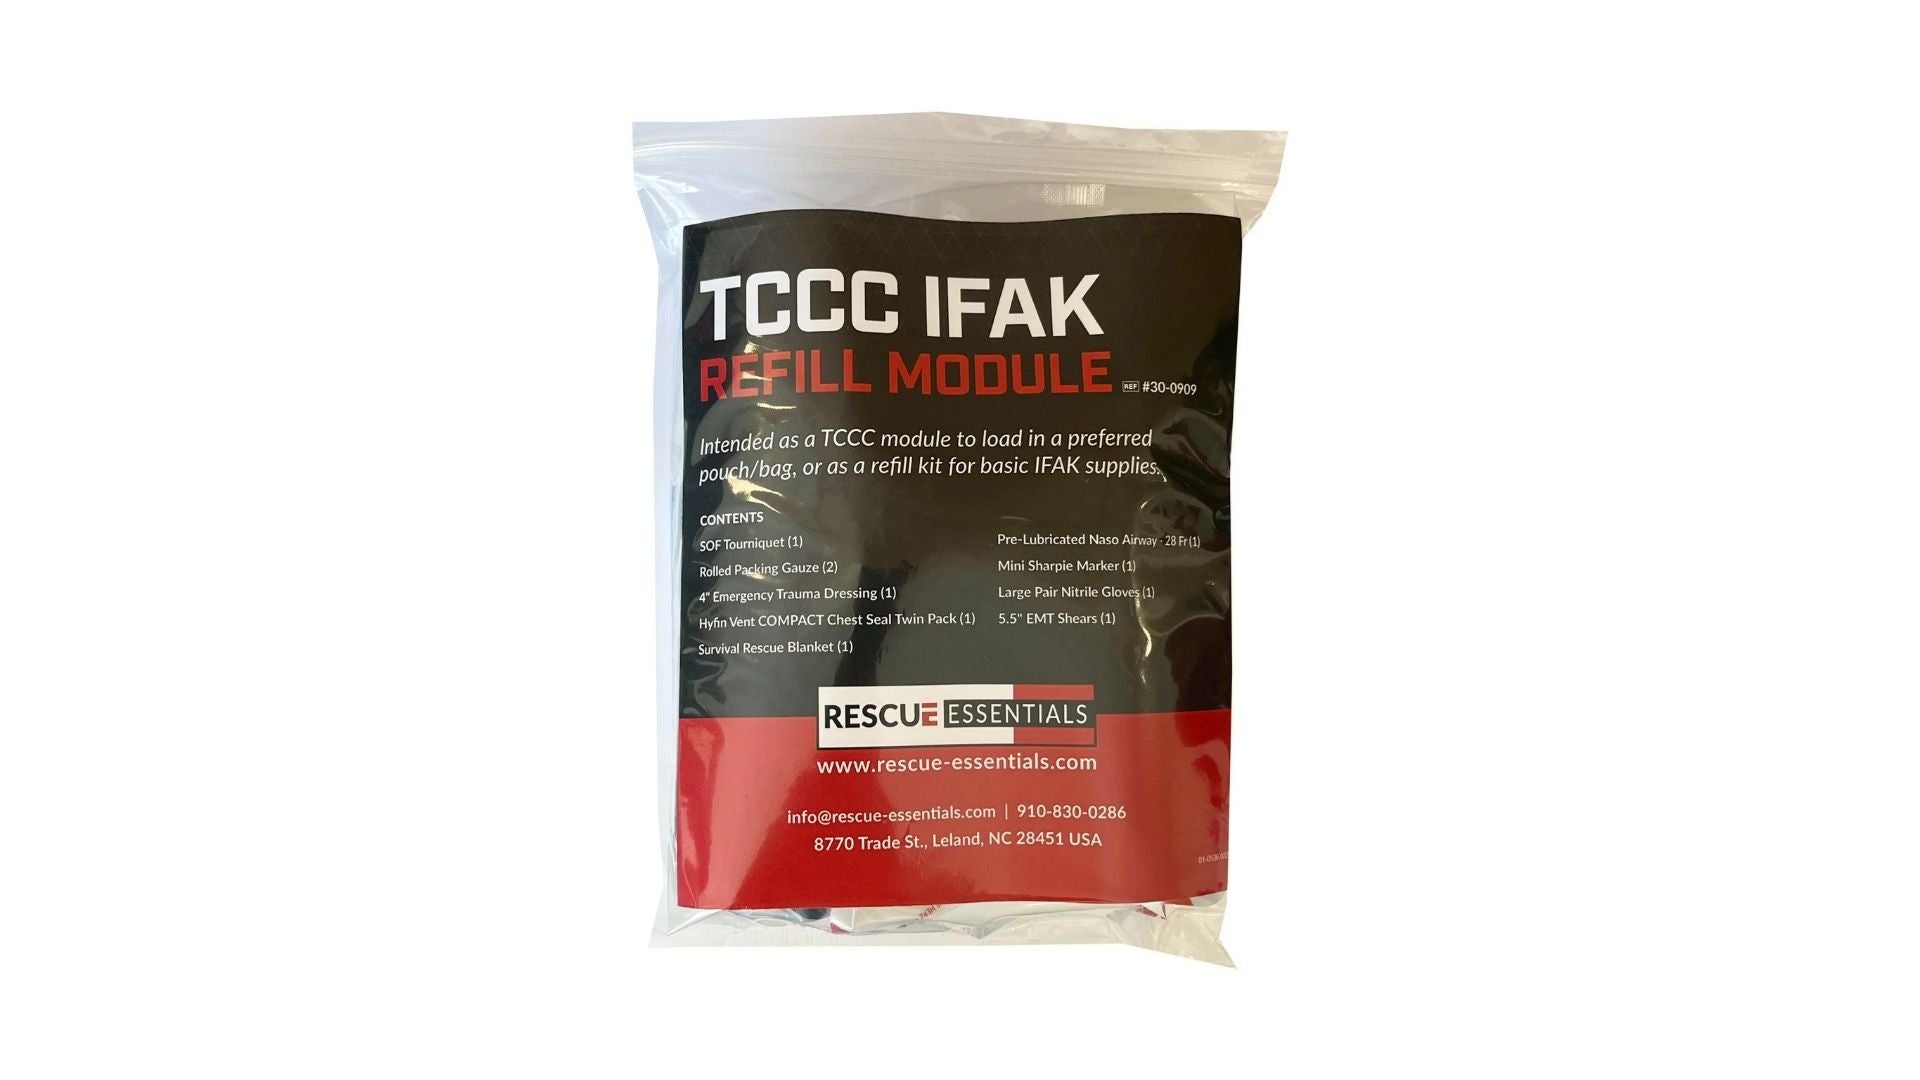 Rescue Essentials TCCC IFAK Refill Module